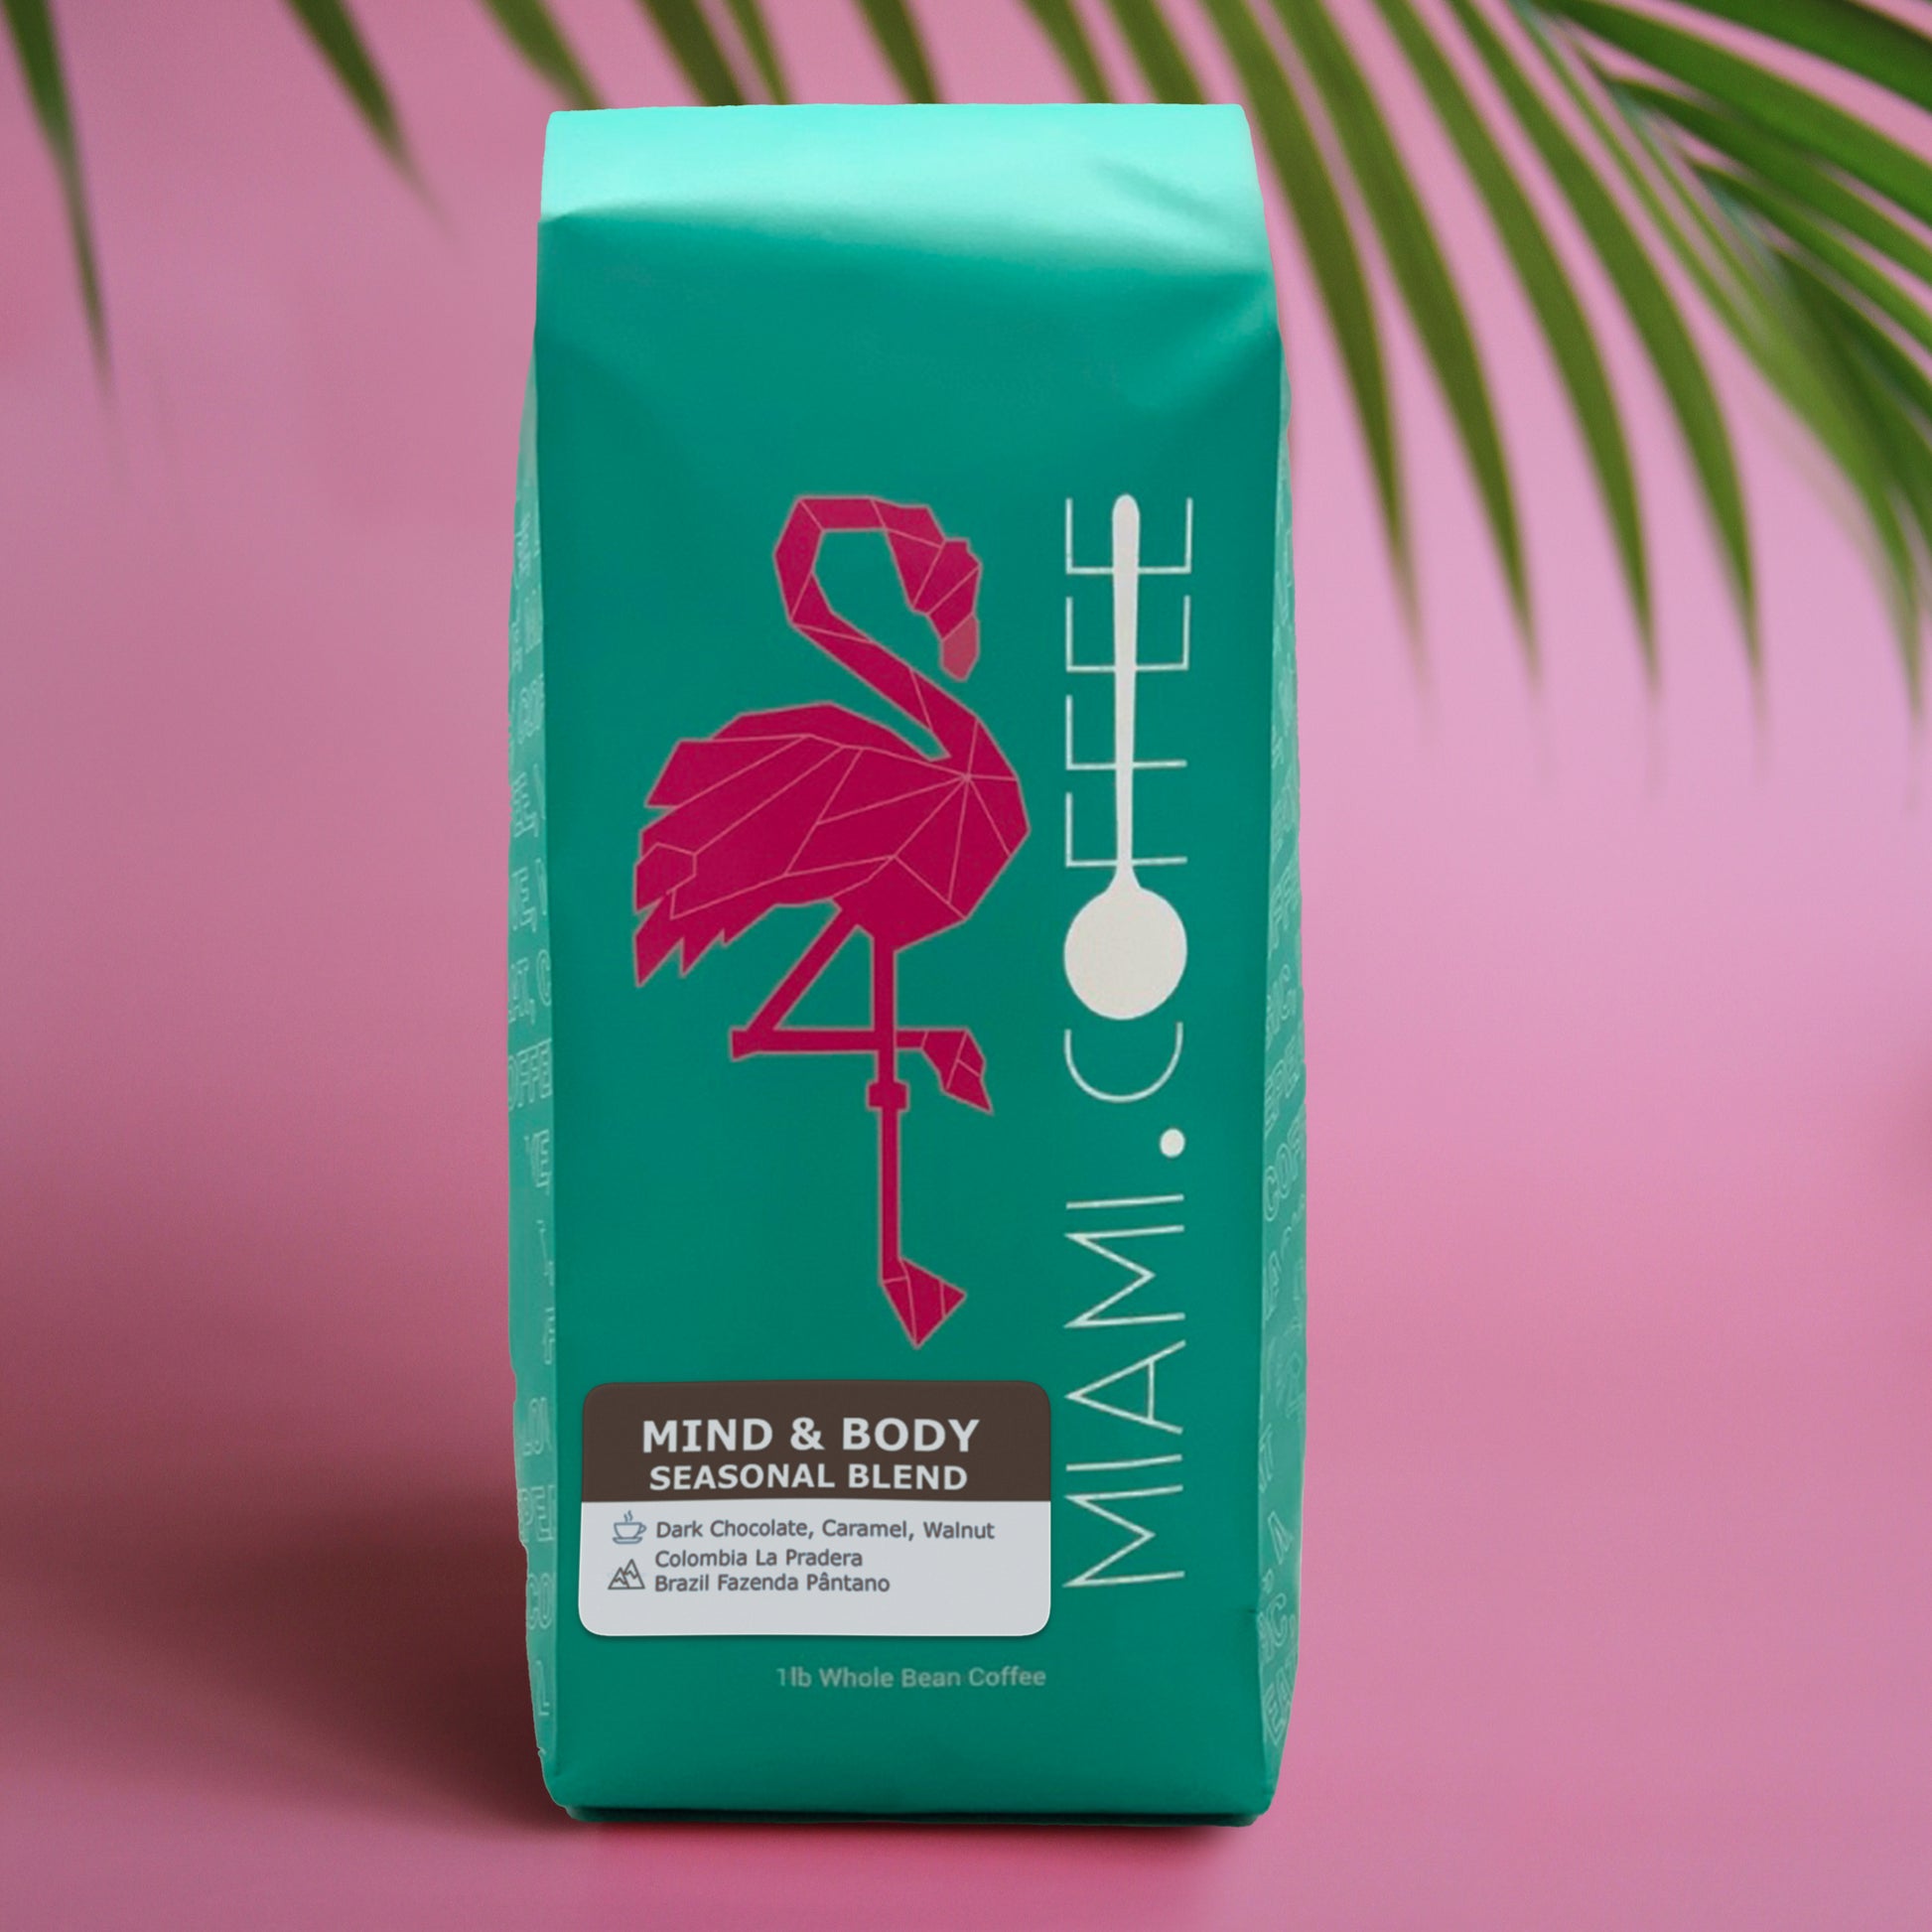 Mind & Body Blend by Miami dot Coffee 1 Pound bag. Flavor descriptors: Dark Chocolate, Caramel, Walnut